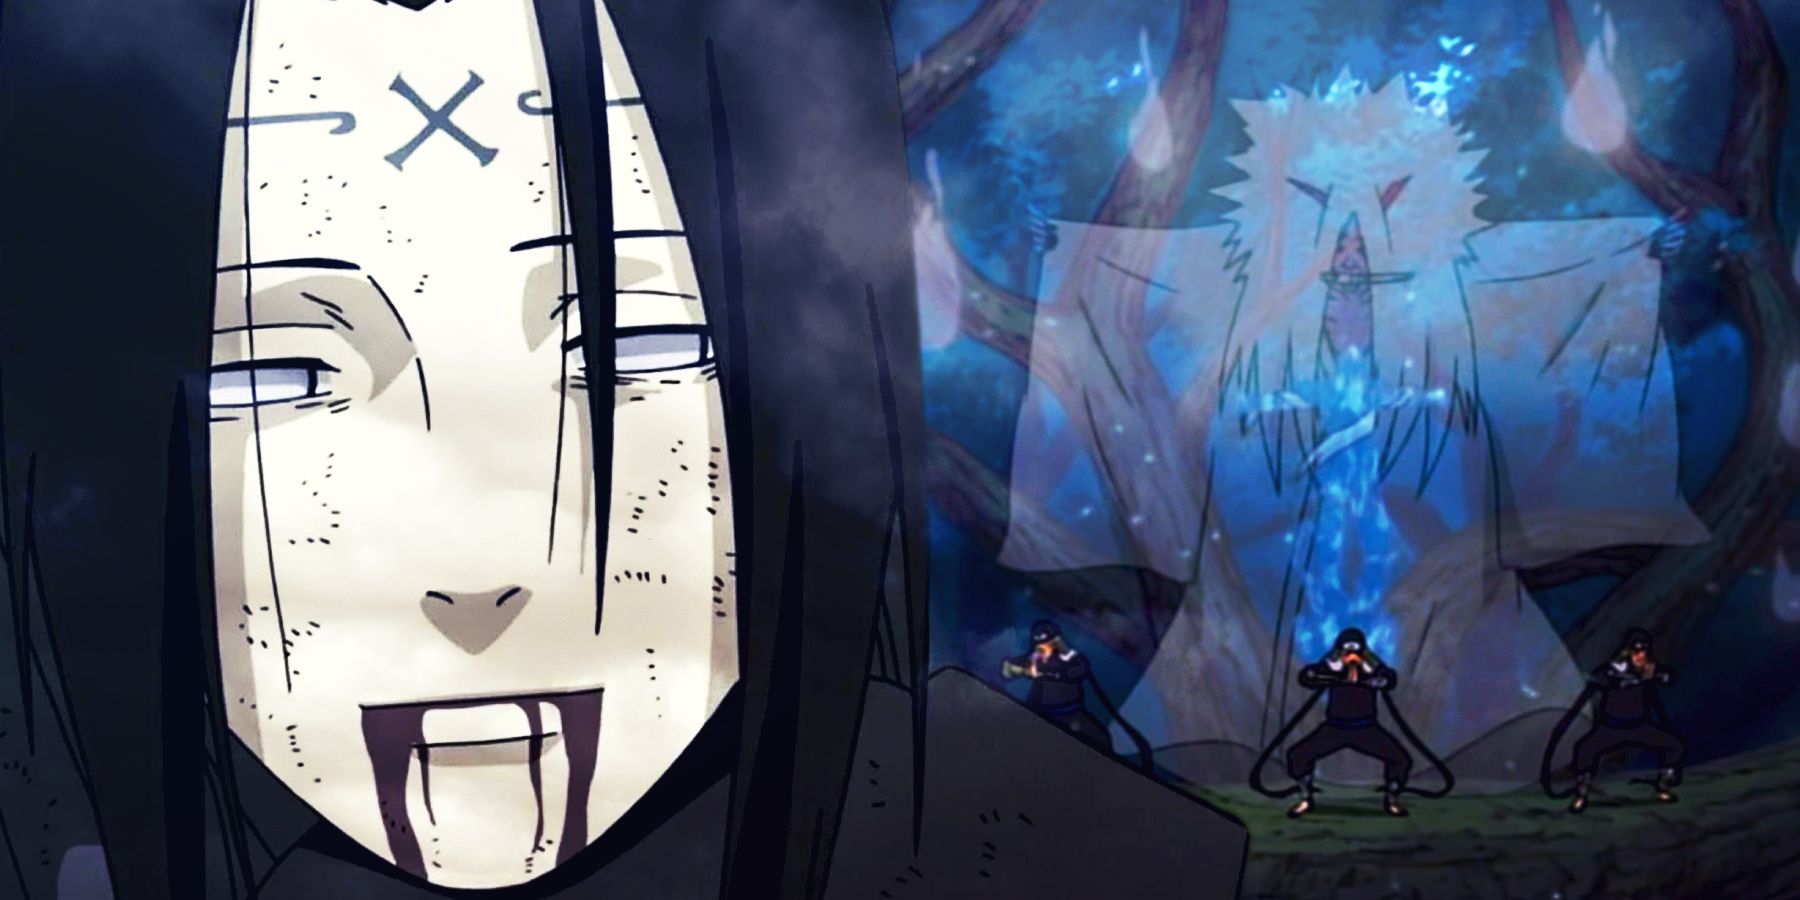 14 Naruto Characters That Boruto Abandoned (& 10 That Need To Go)